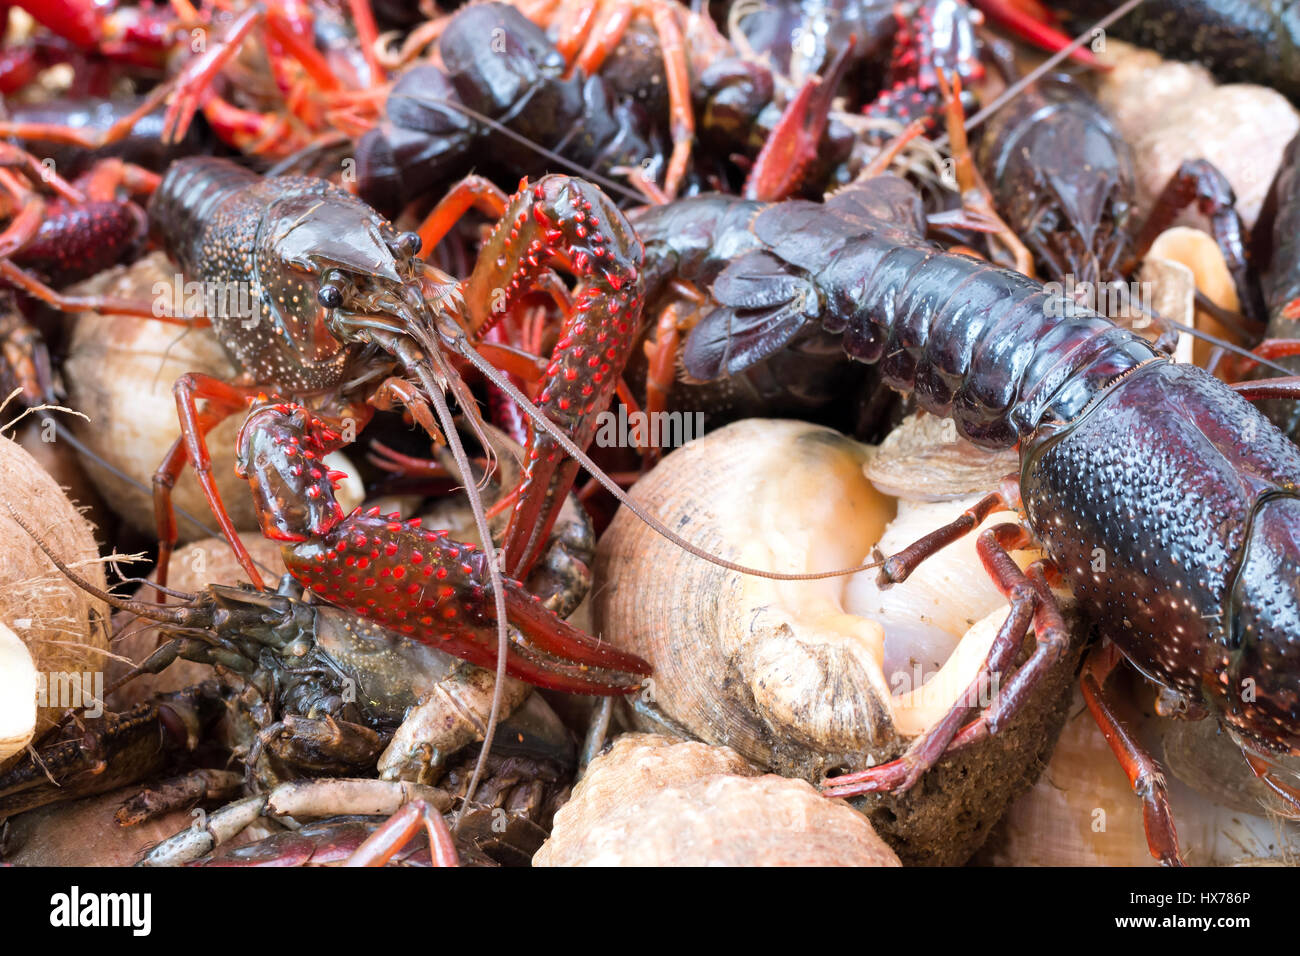 river crayfish at fishmonger Stock Photo